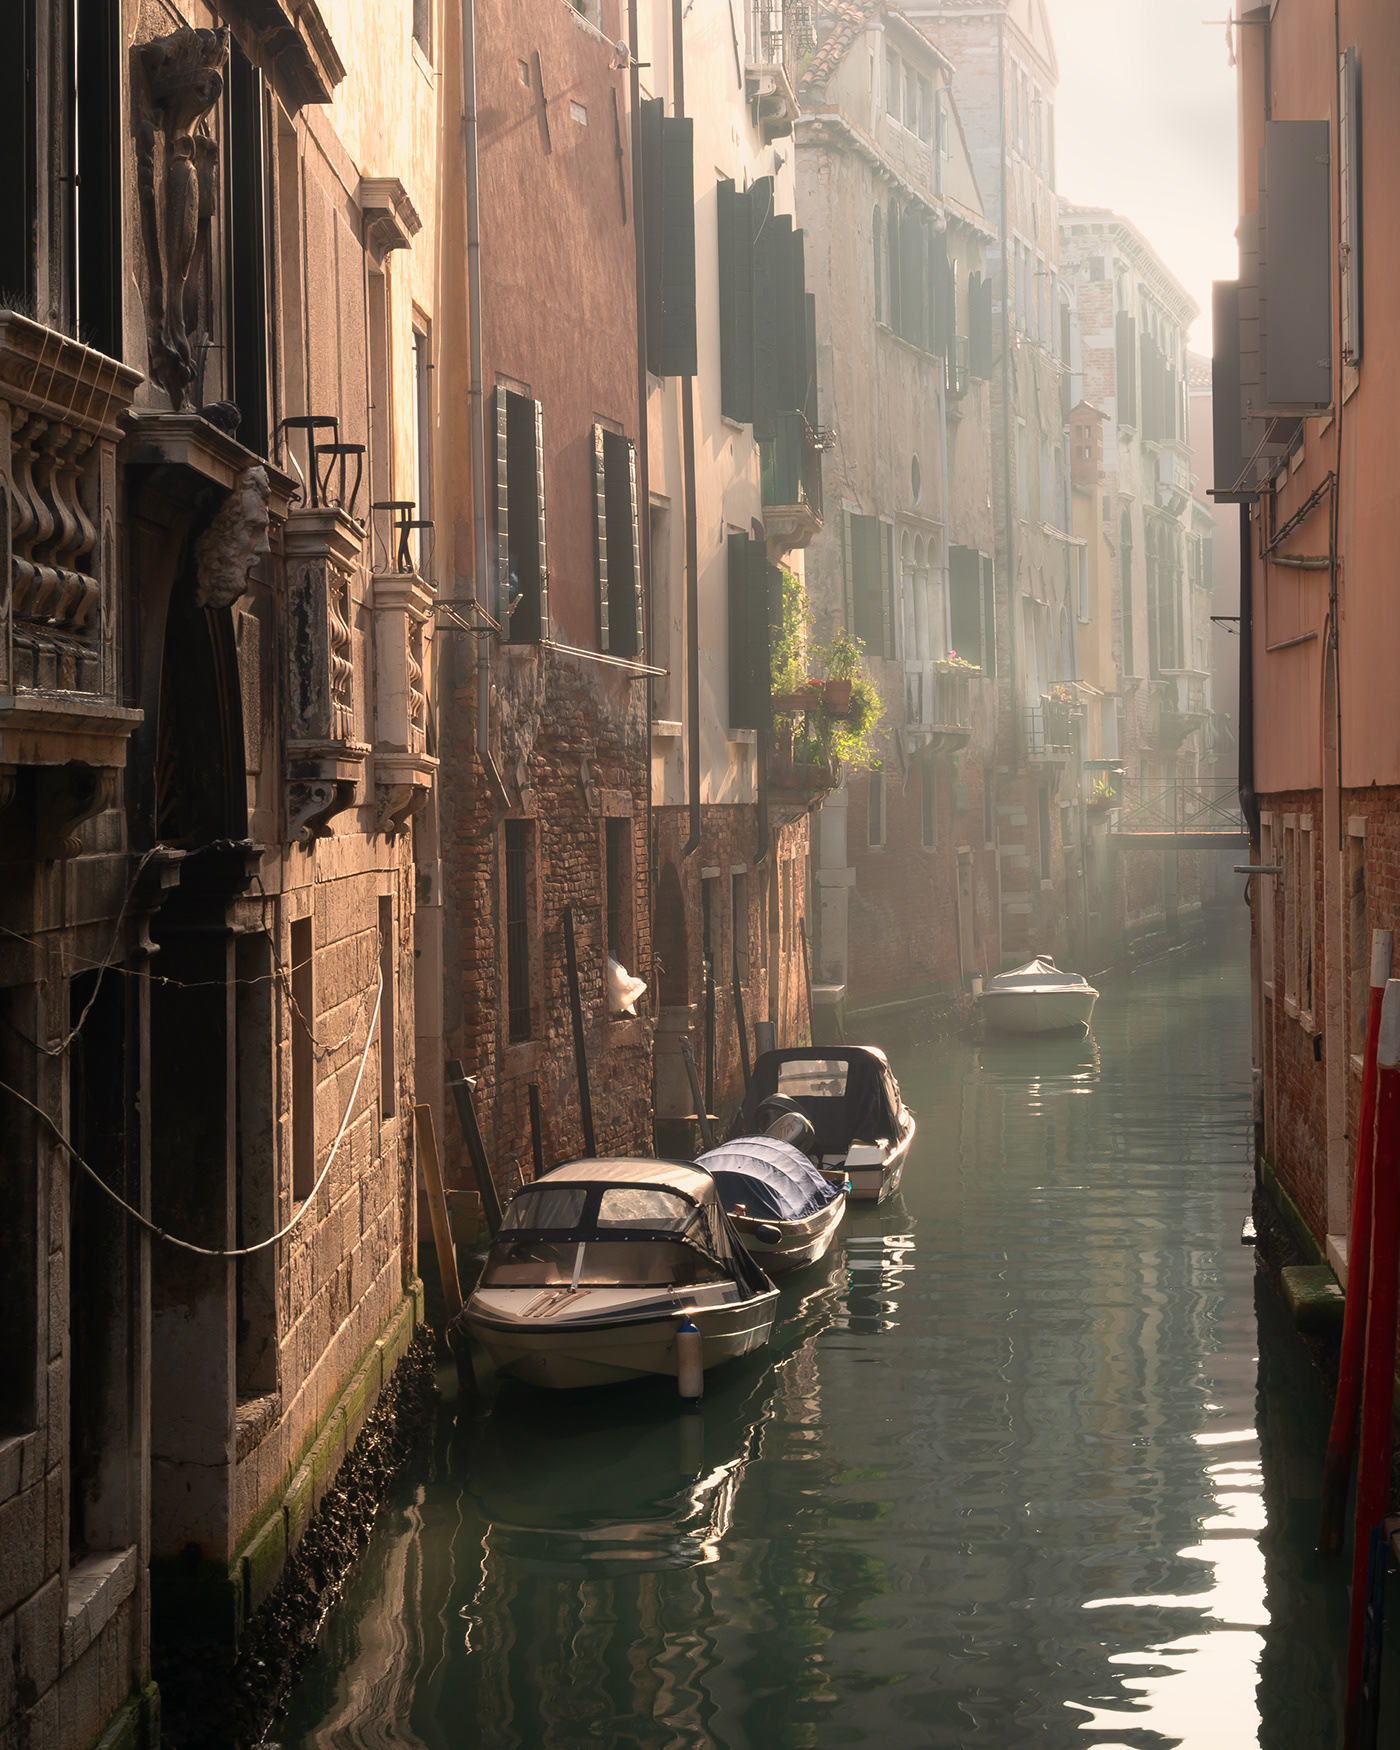 architecture cityscape Europe foggy Italy misty venice canal Moody Travel Venice Venice canal